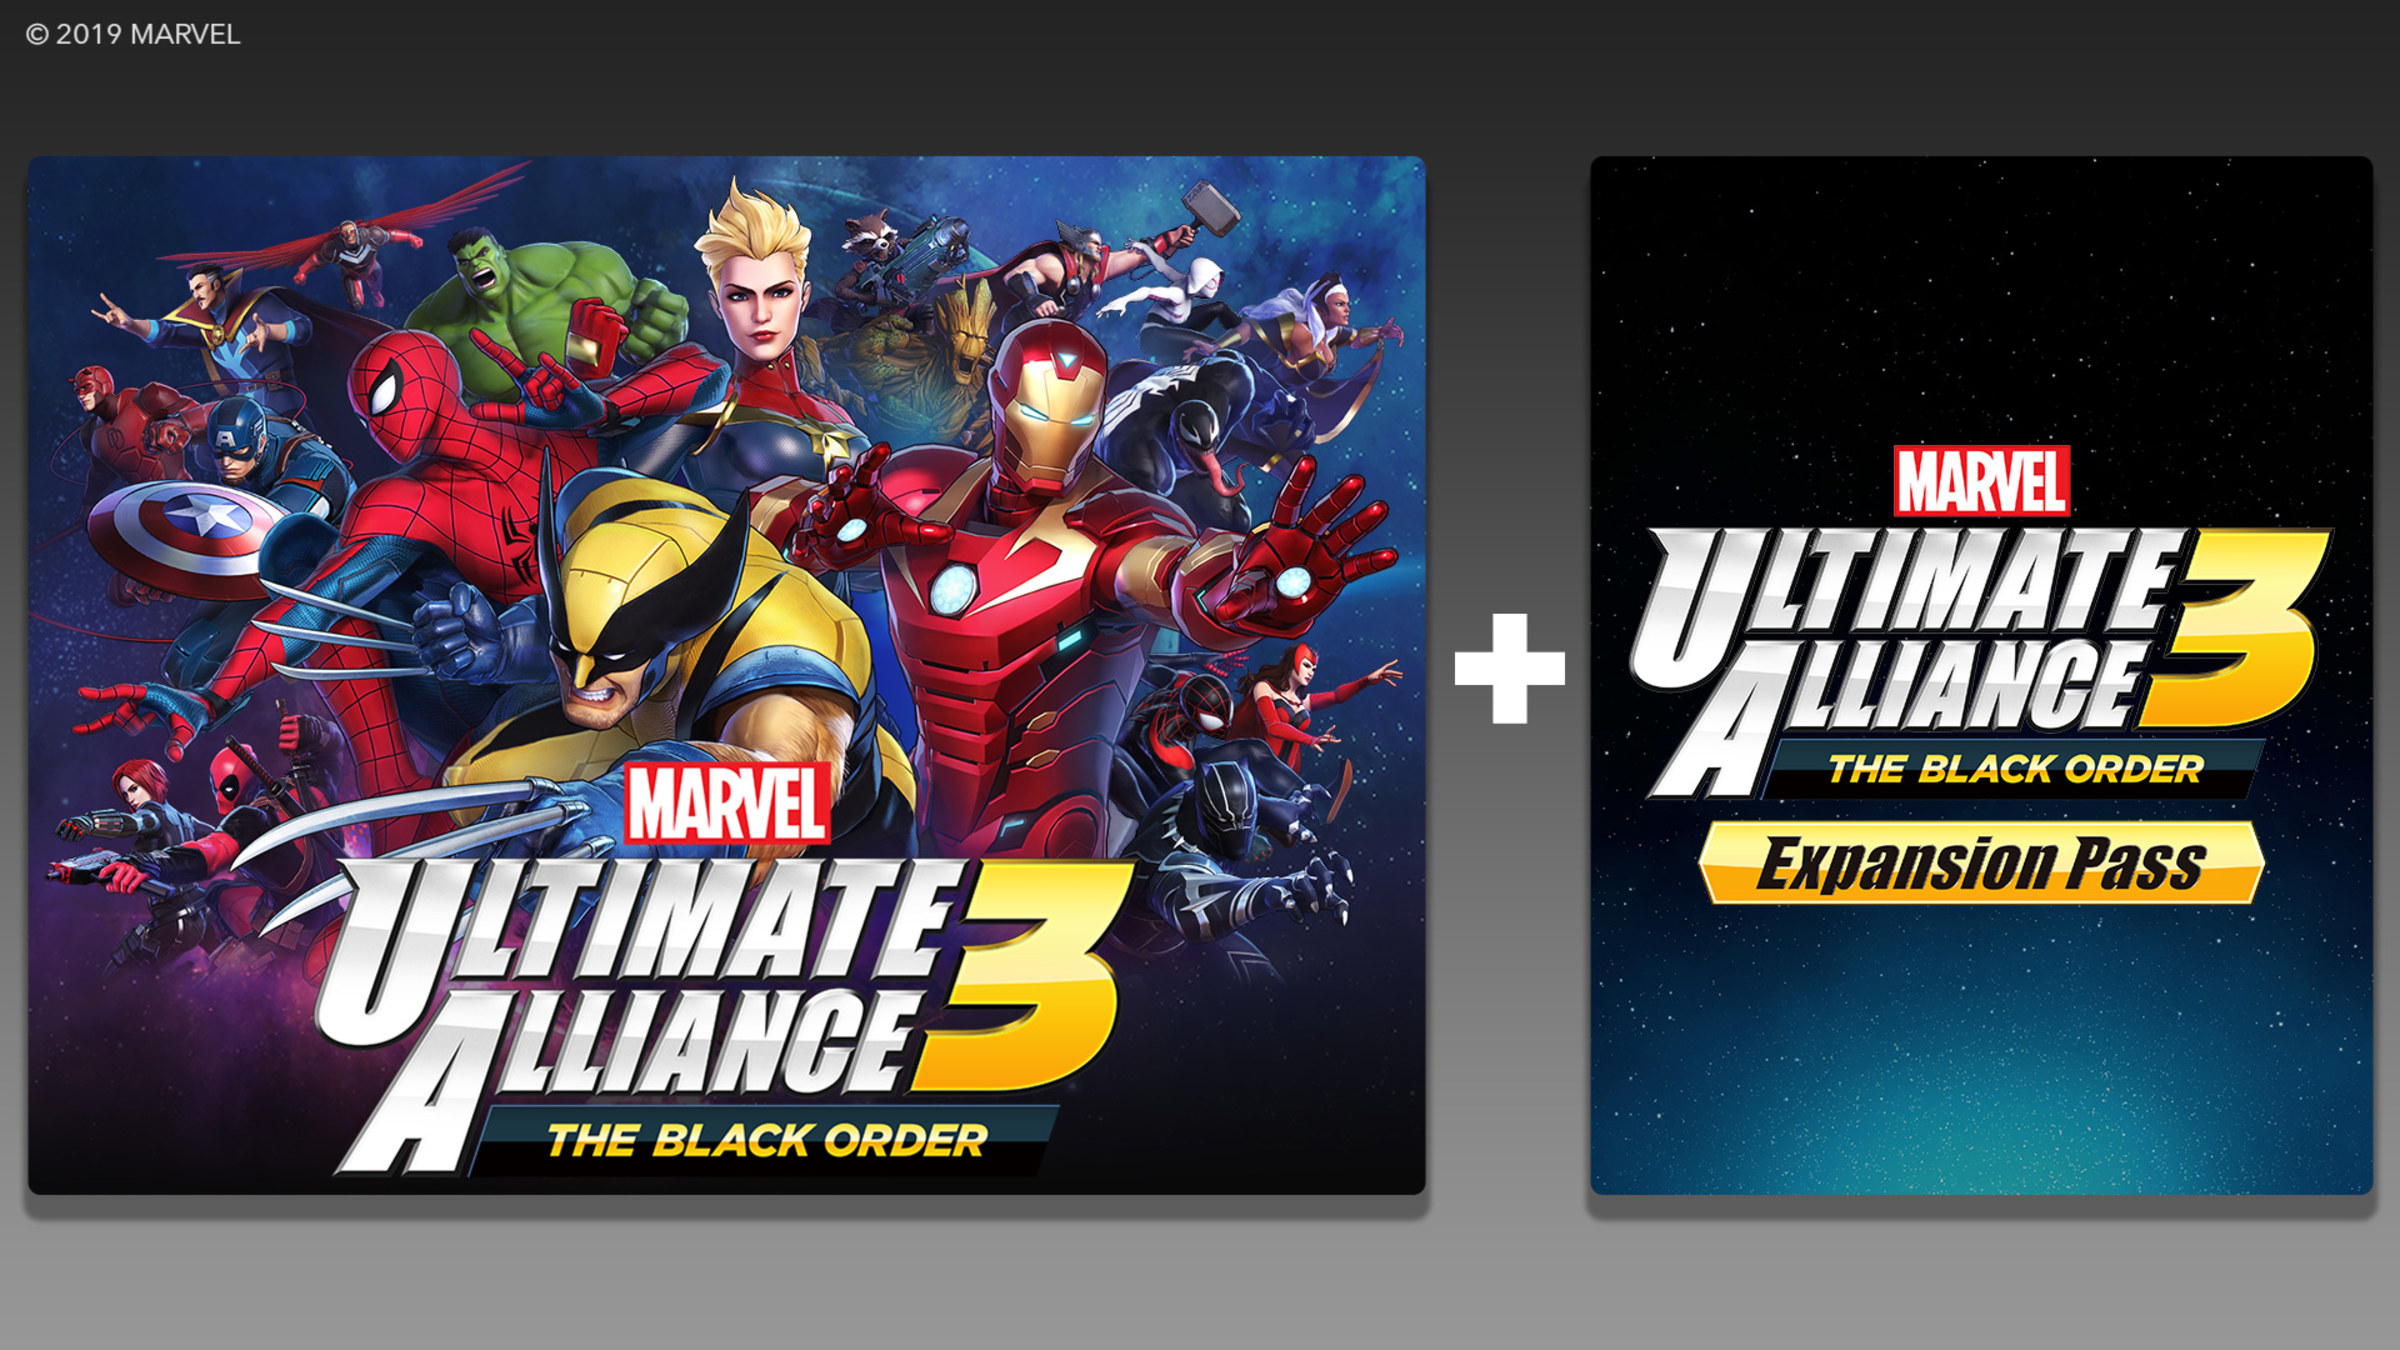 Marvel: Ultimate Alliance Bundle (UK PSN) is back in stock : r/MAU3